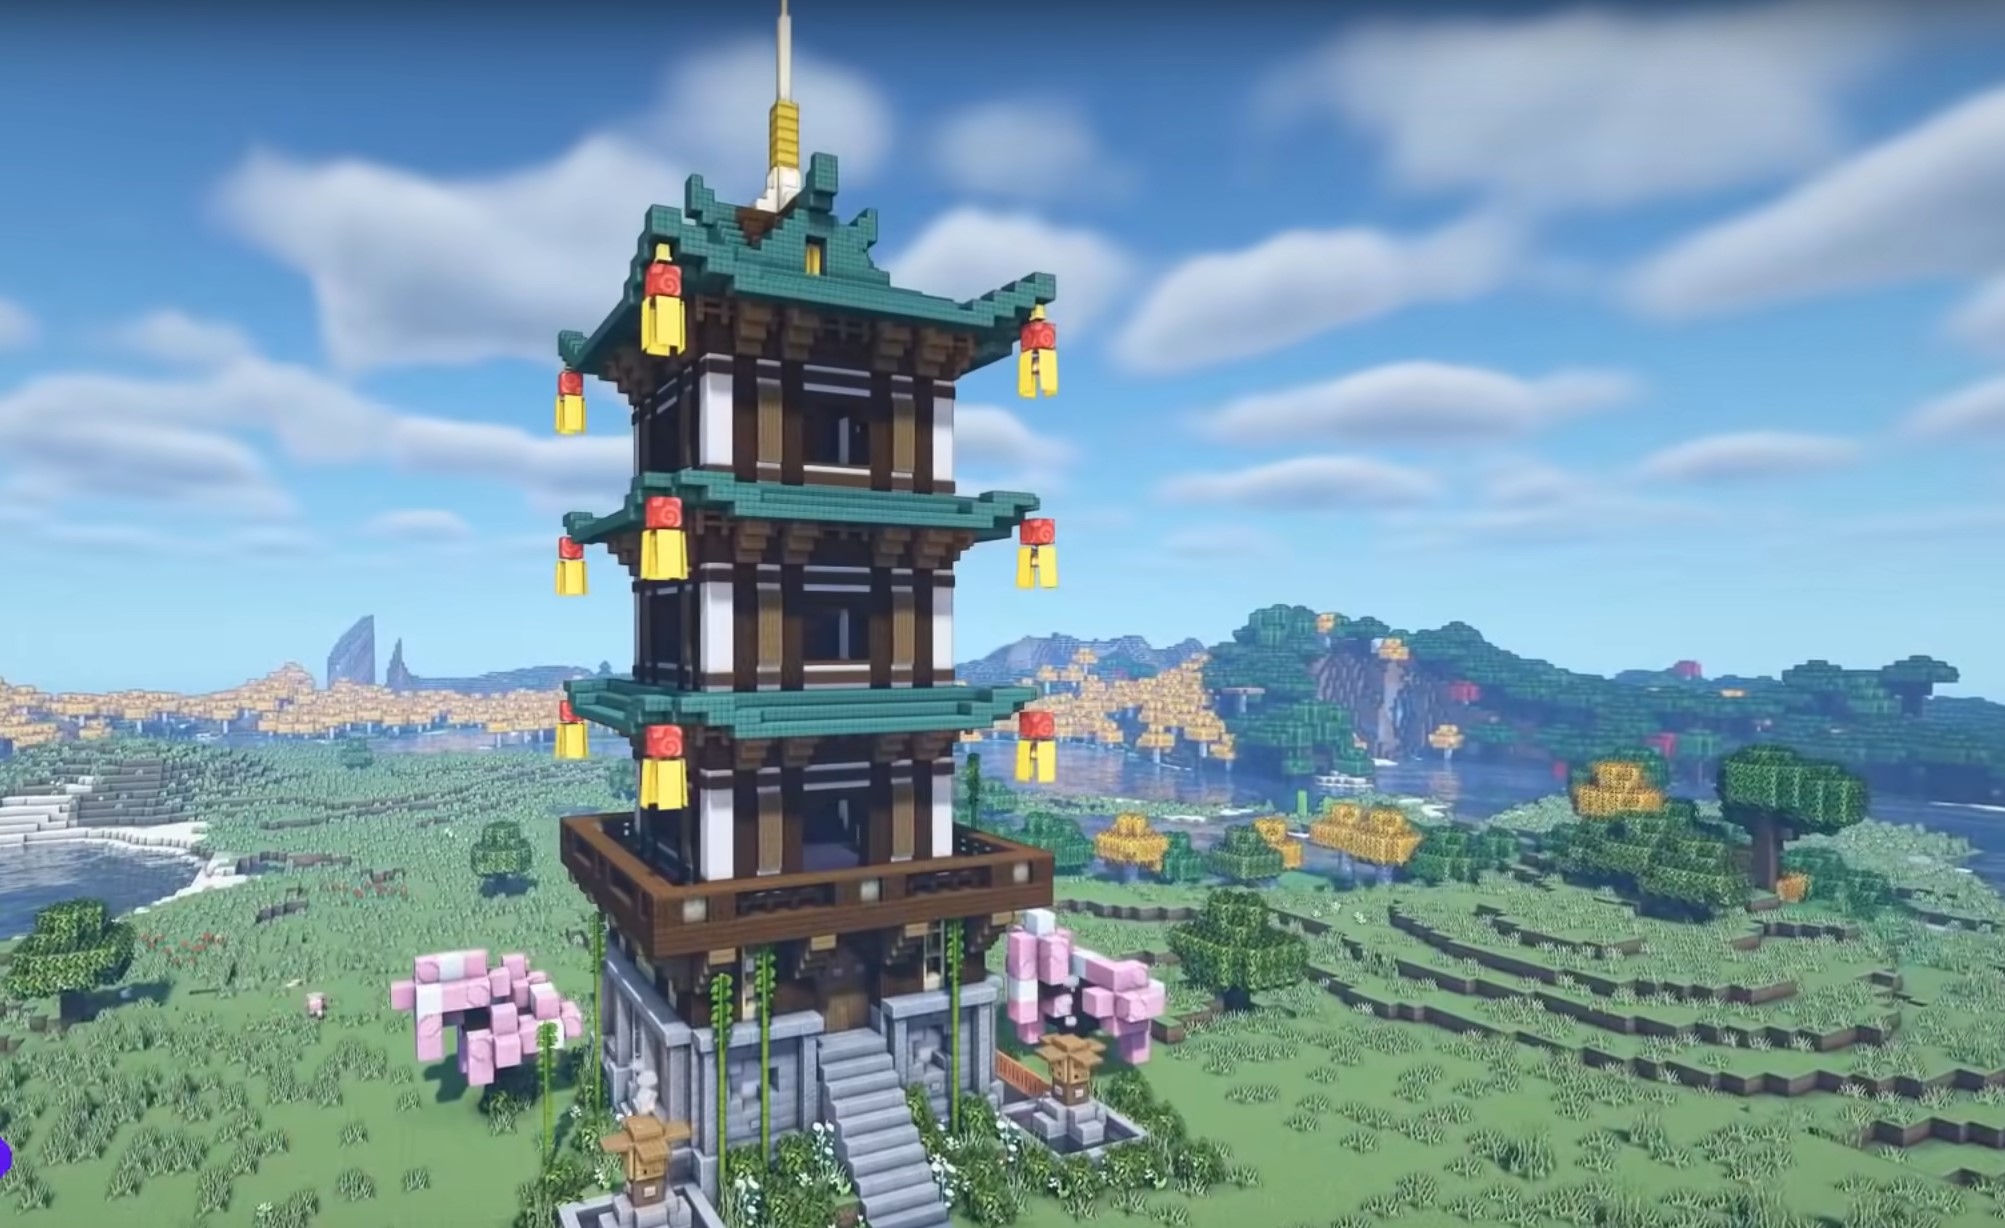 Japanese Pagoda minecraft building idea